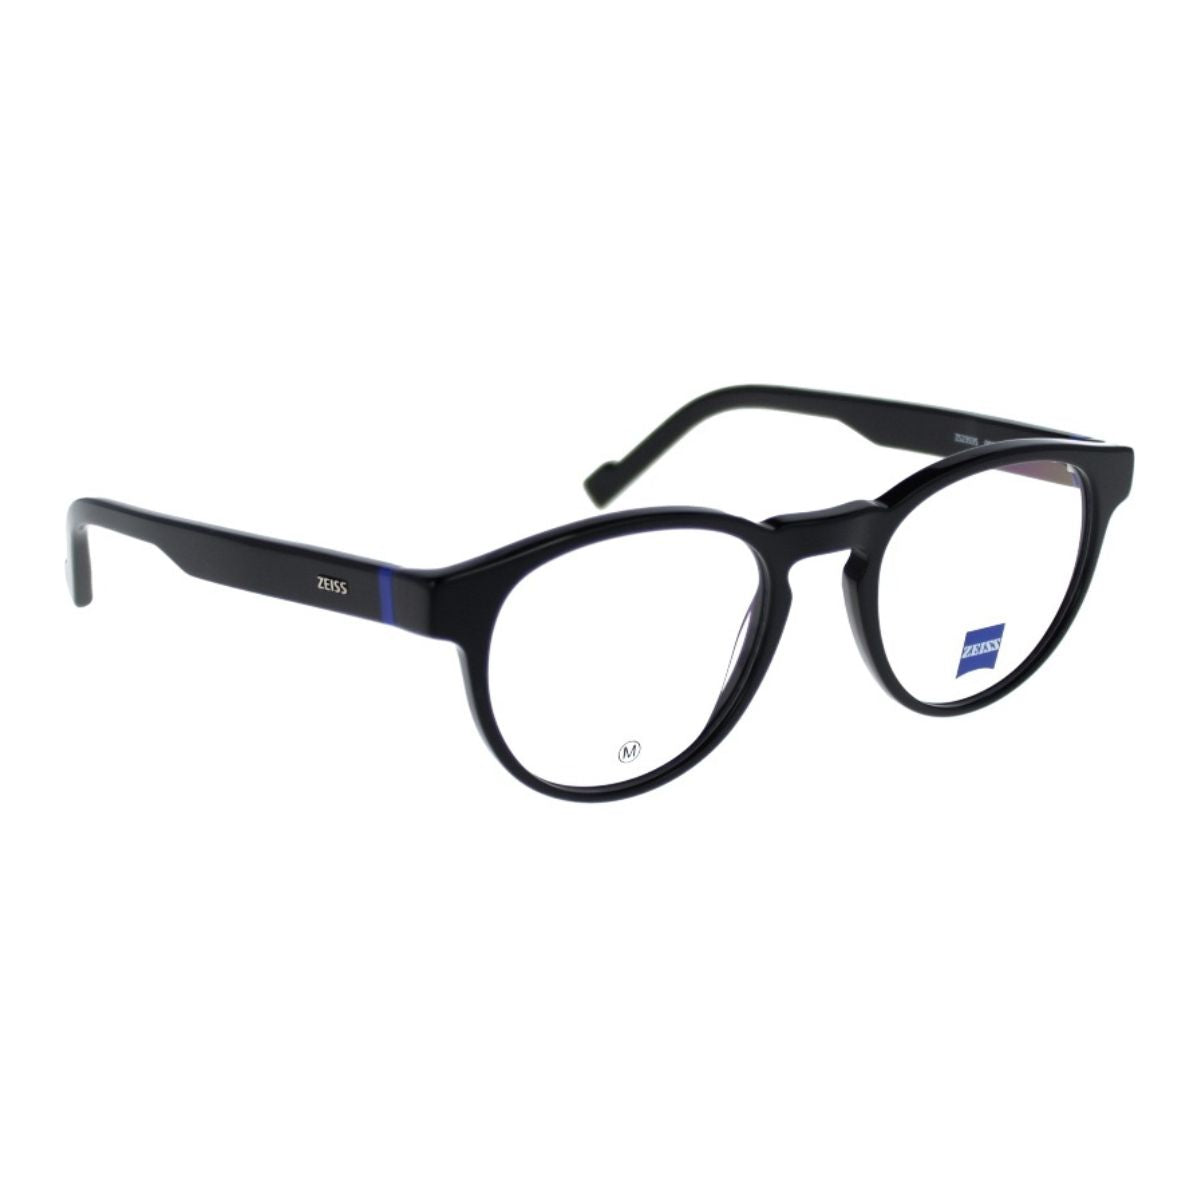 "Zeiss 23535 001 optical eyeglasses frame for men and women online at optorium"